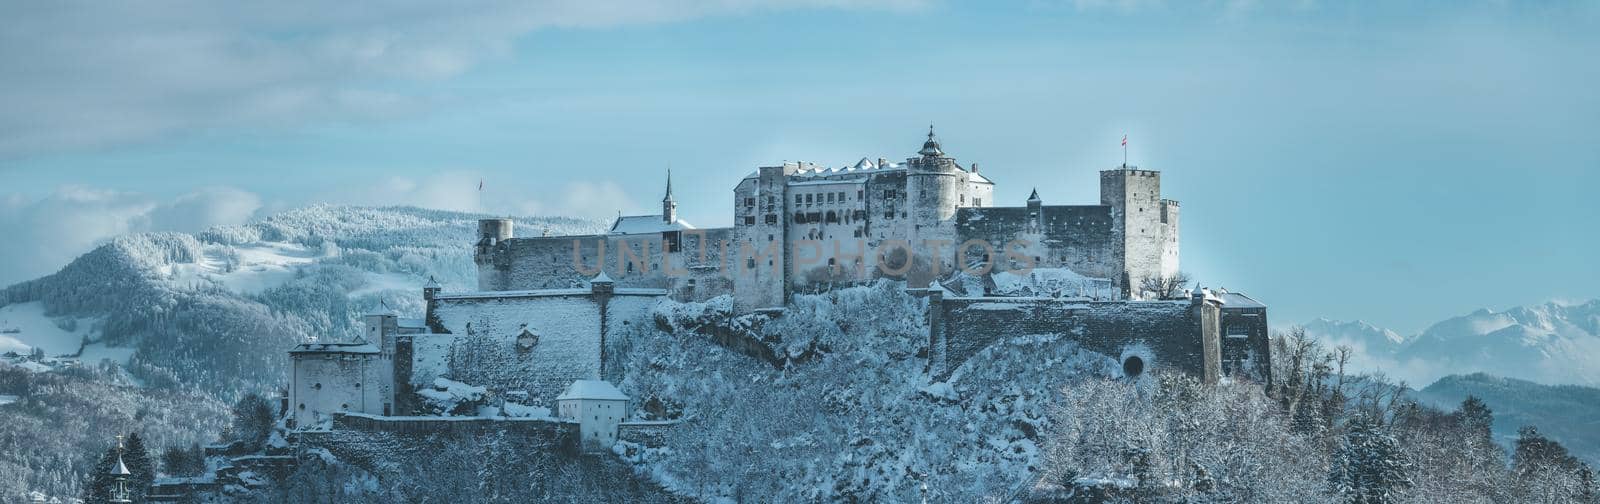 Fortress Hohensalzburg in the Winter, snowy by Daxenbichler